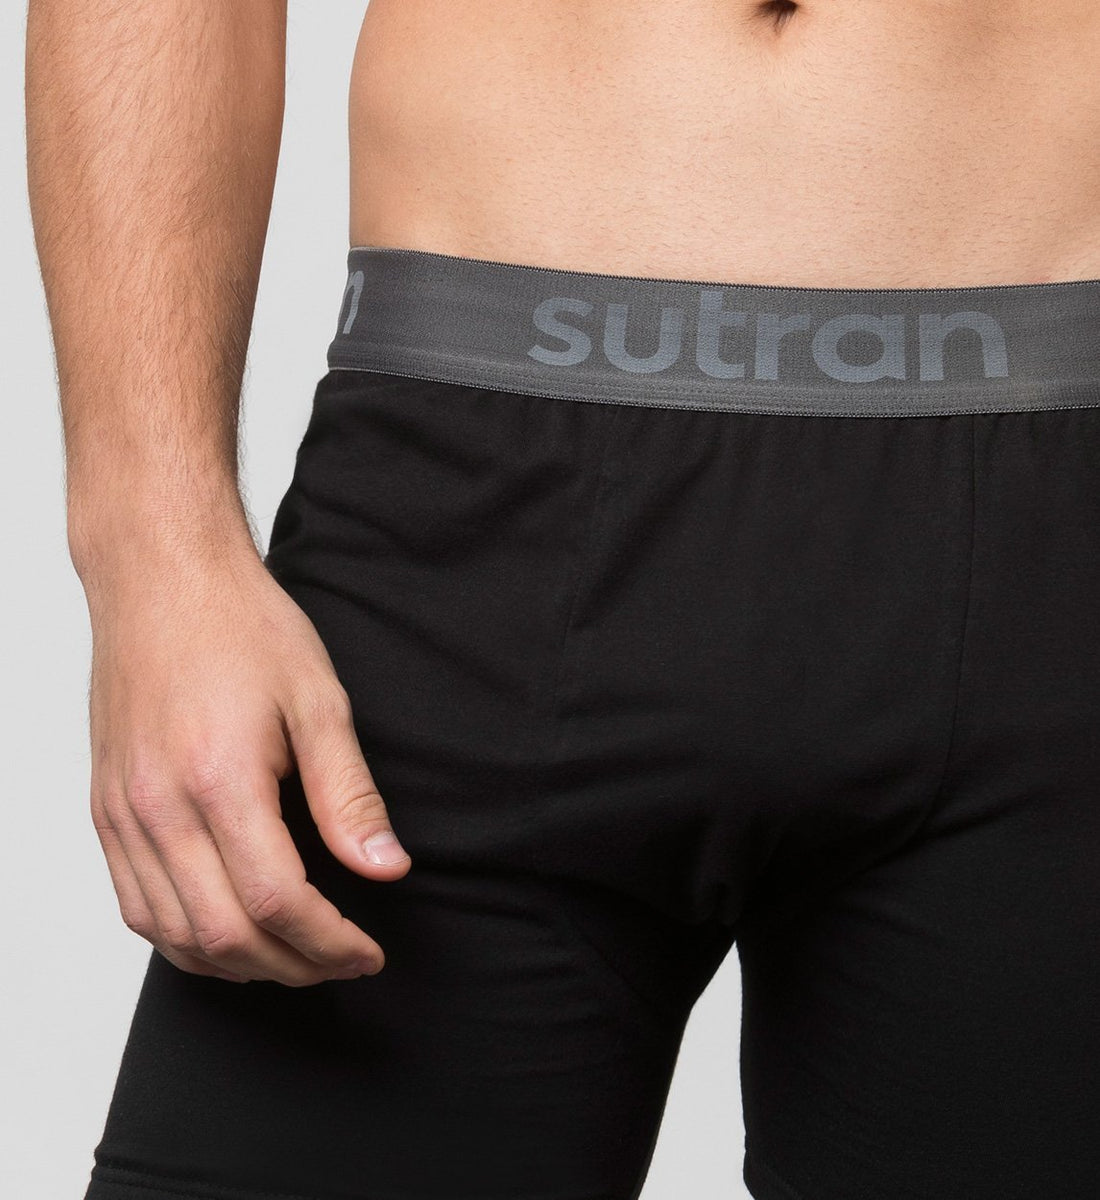 Sweat Proof Boxer Shorts Dark Grey / Black - Sutran Technology